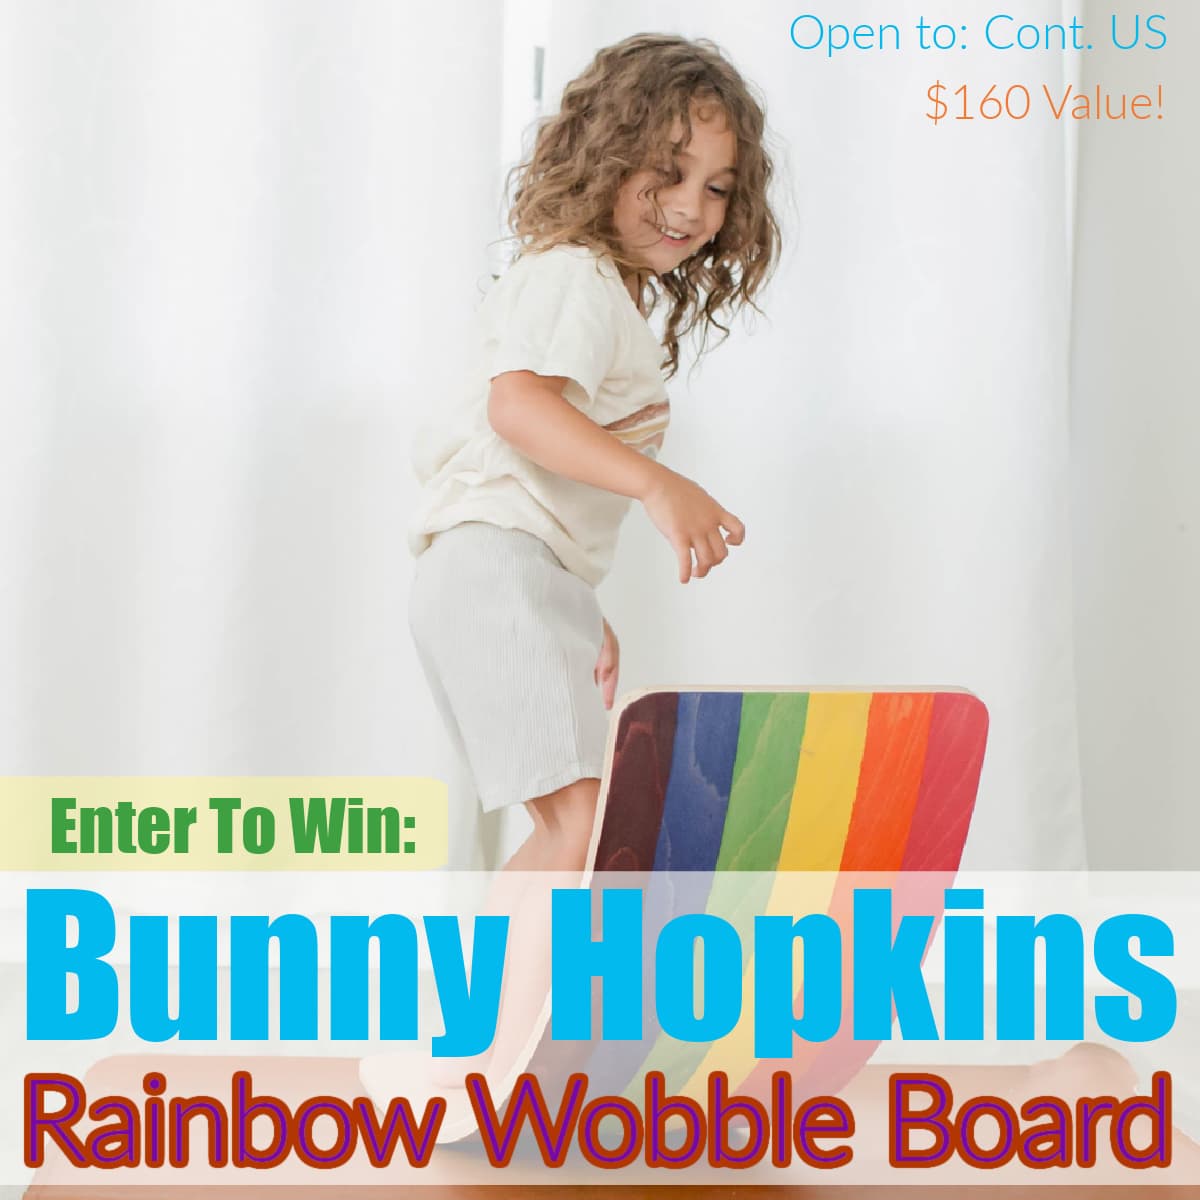 Bunny Hopkins Rainbow Wobble Board Giveaway